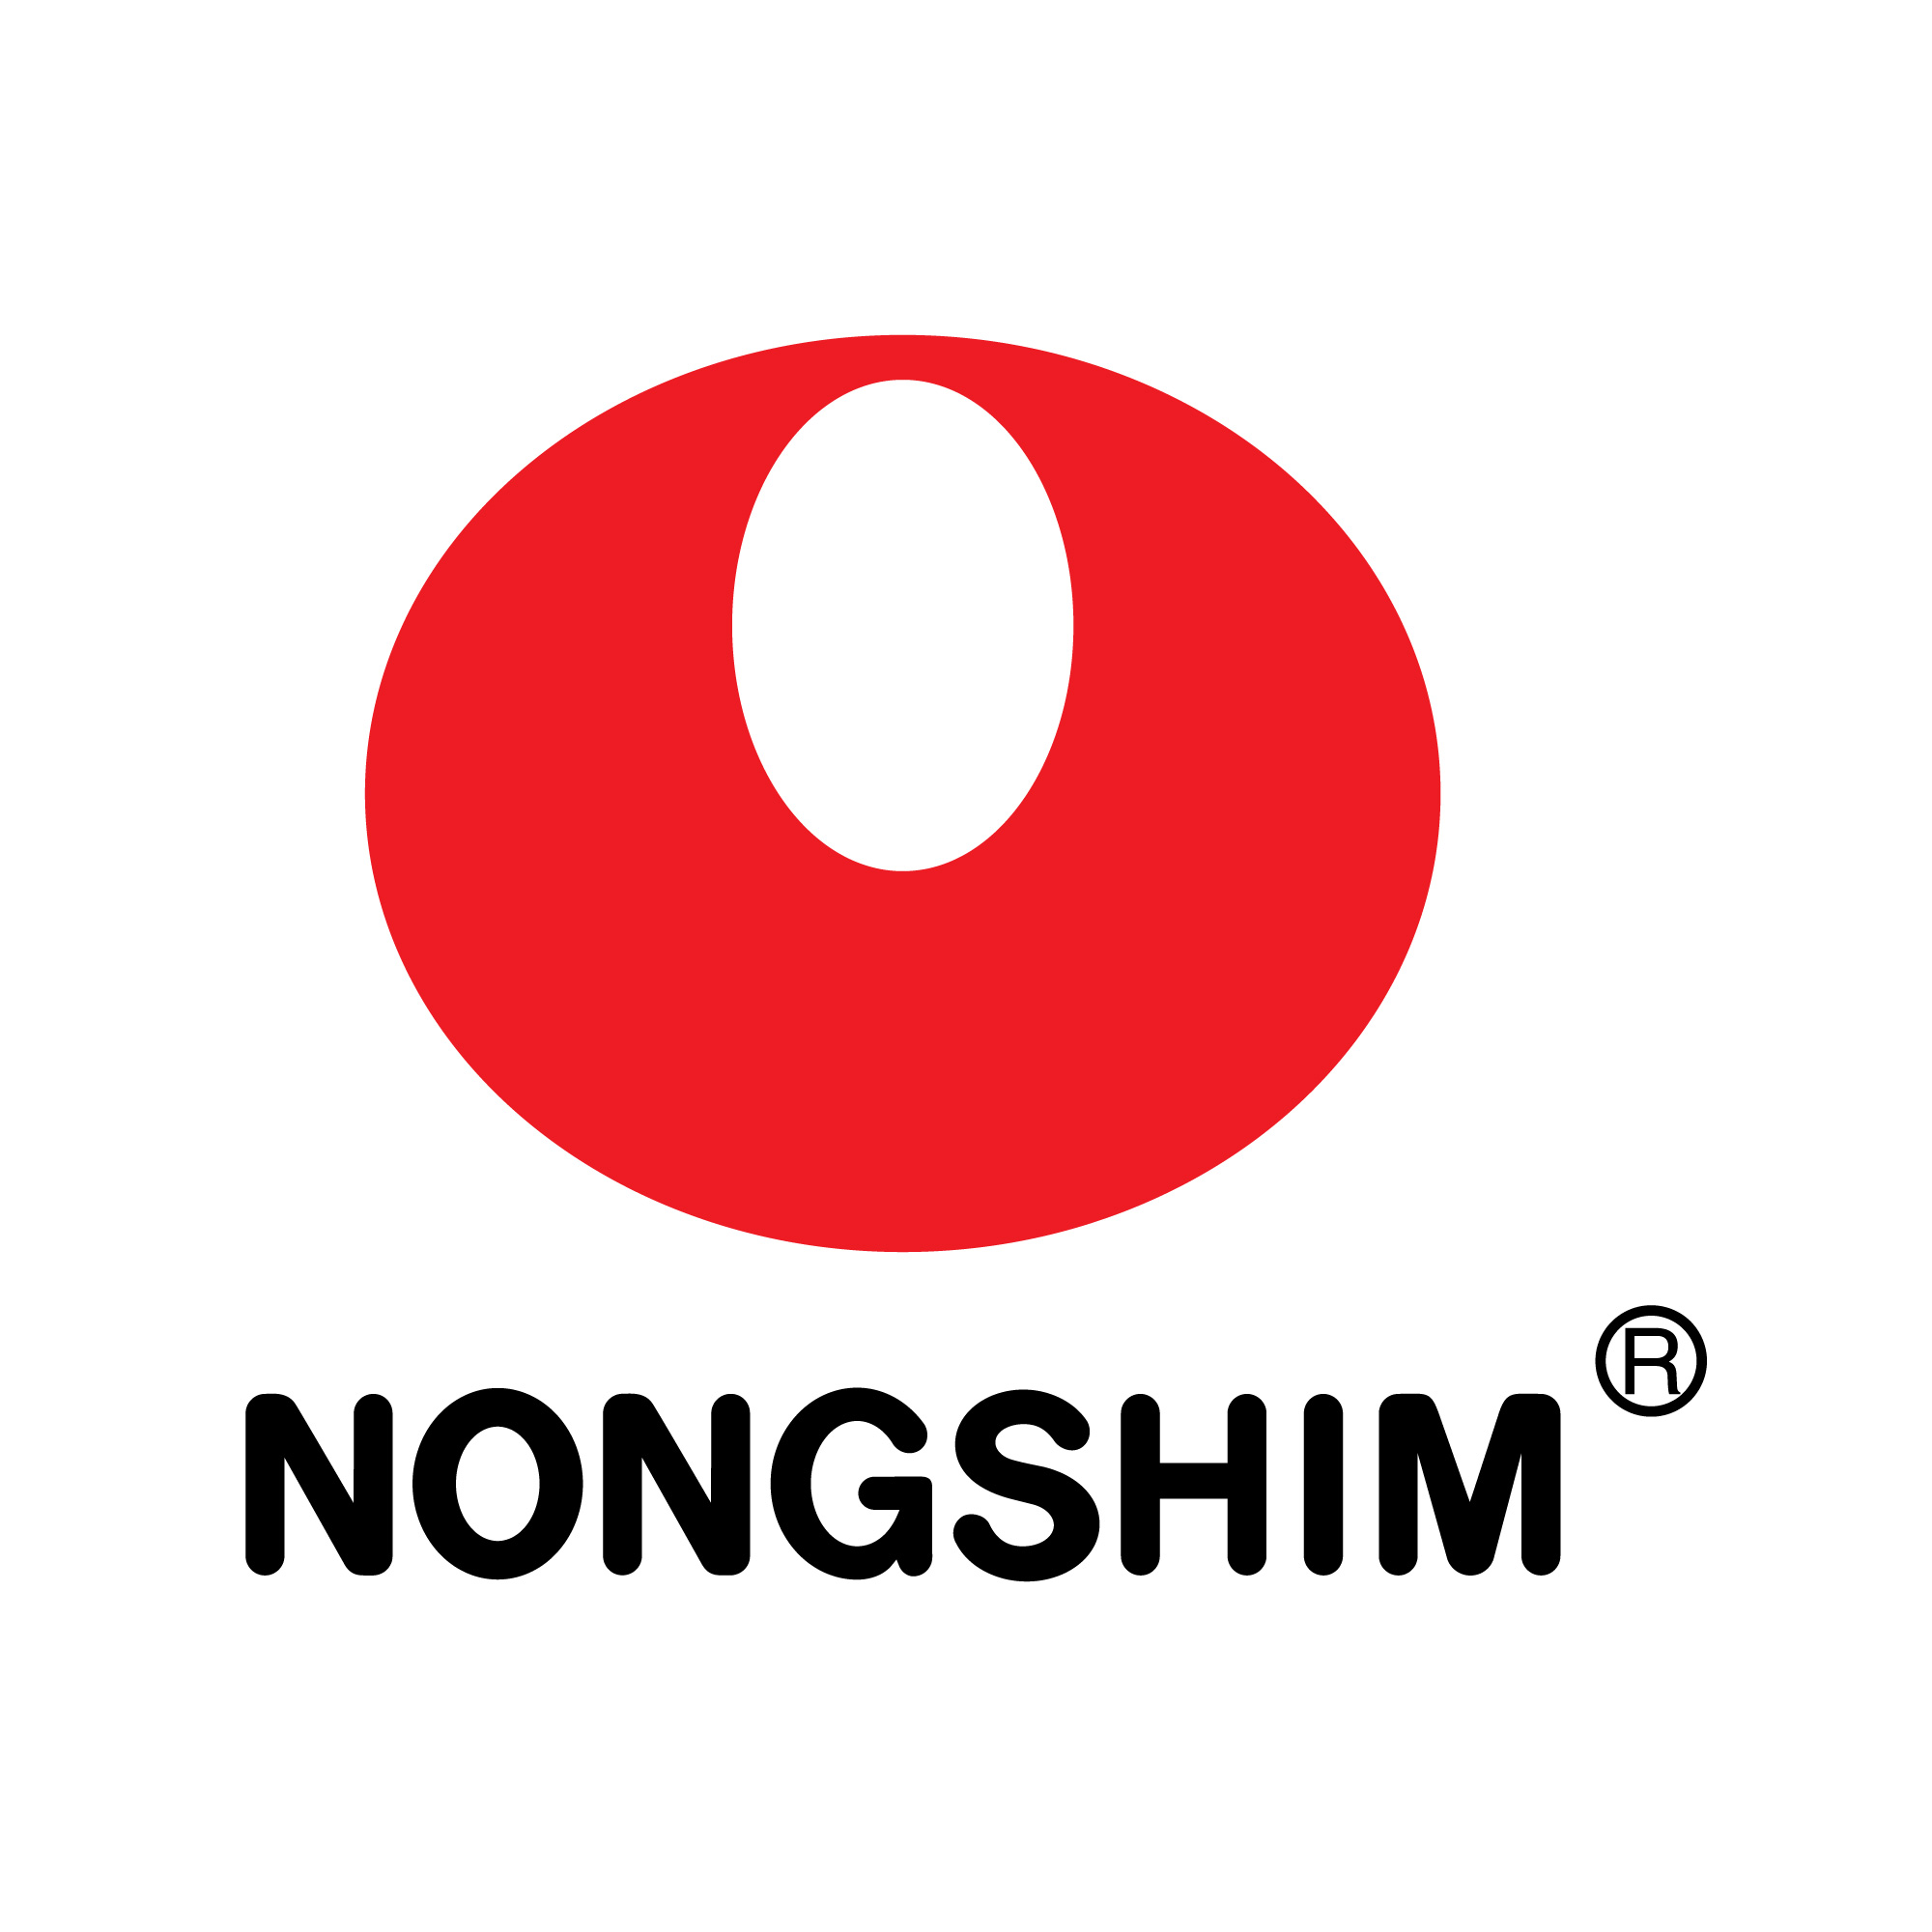 Nongshim logo